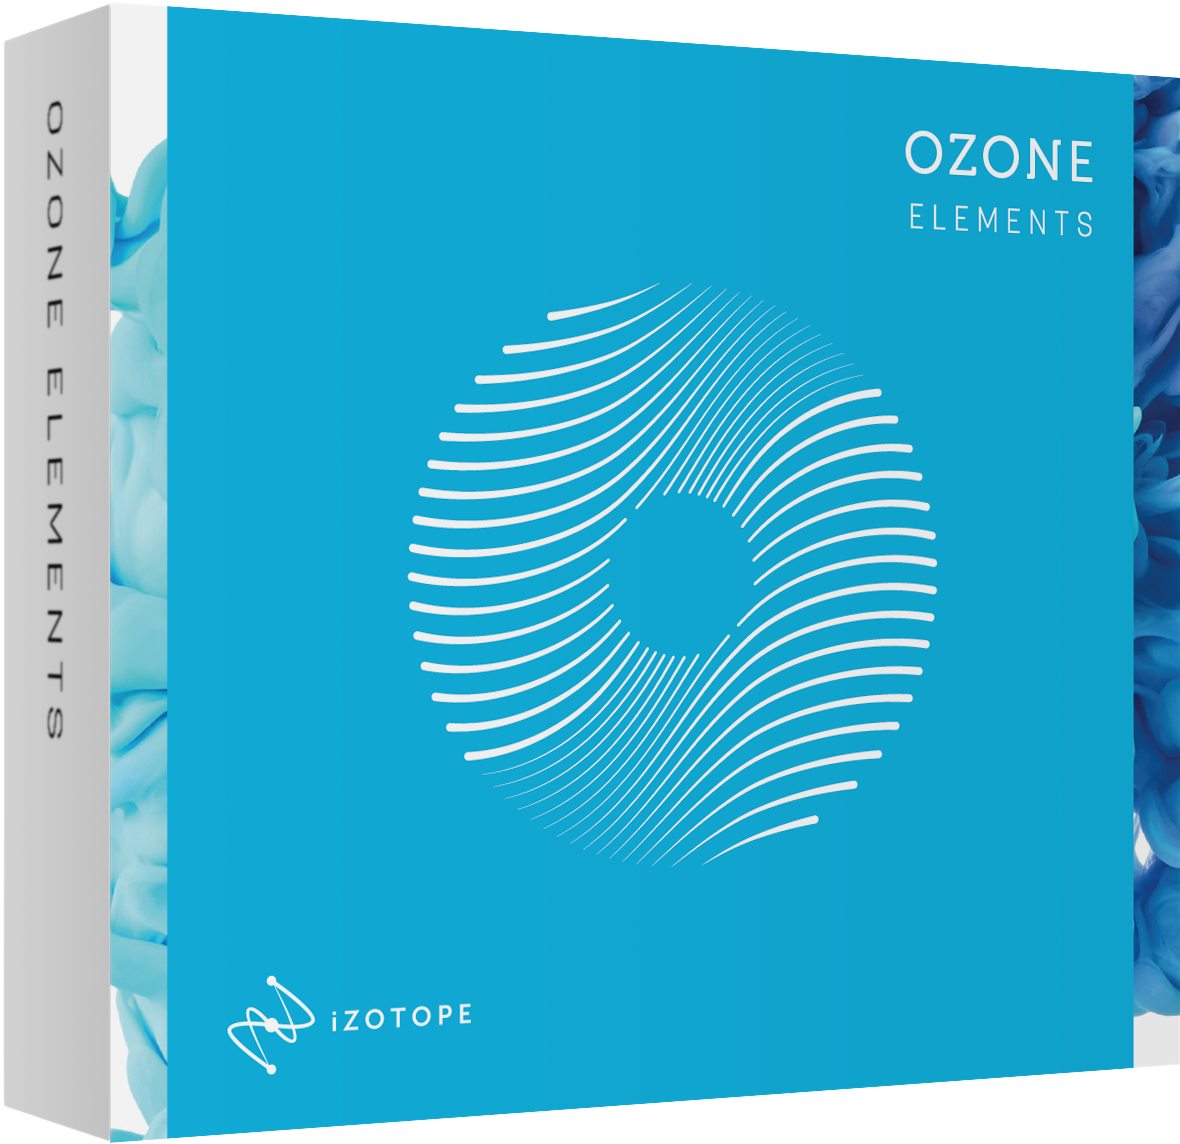 download the last version for apple iZotope Ozone Pro 11.0.0